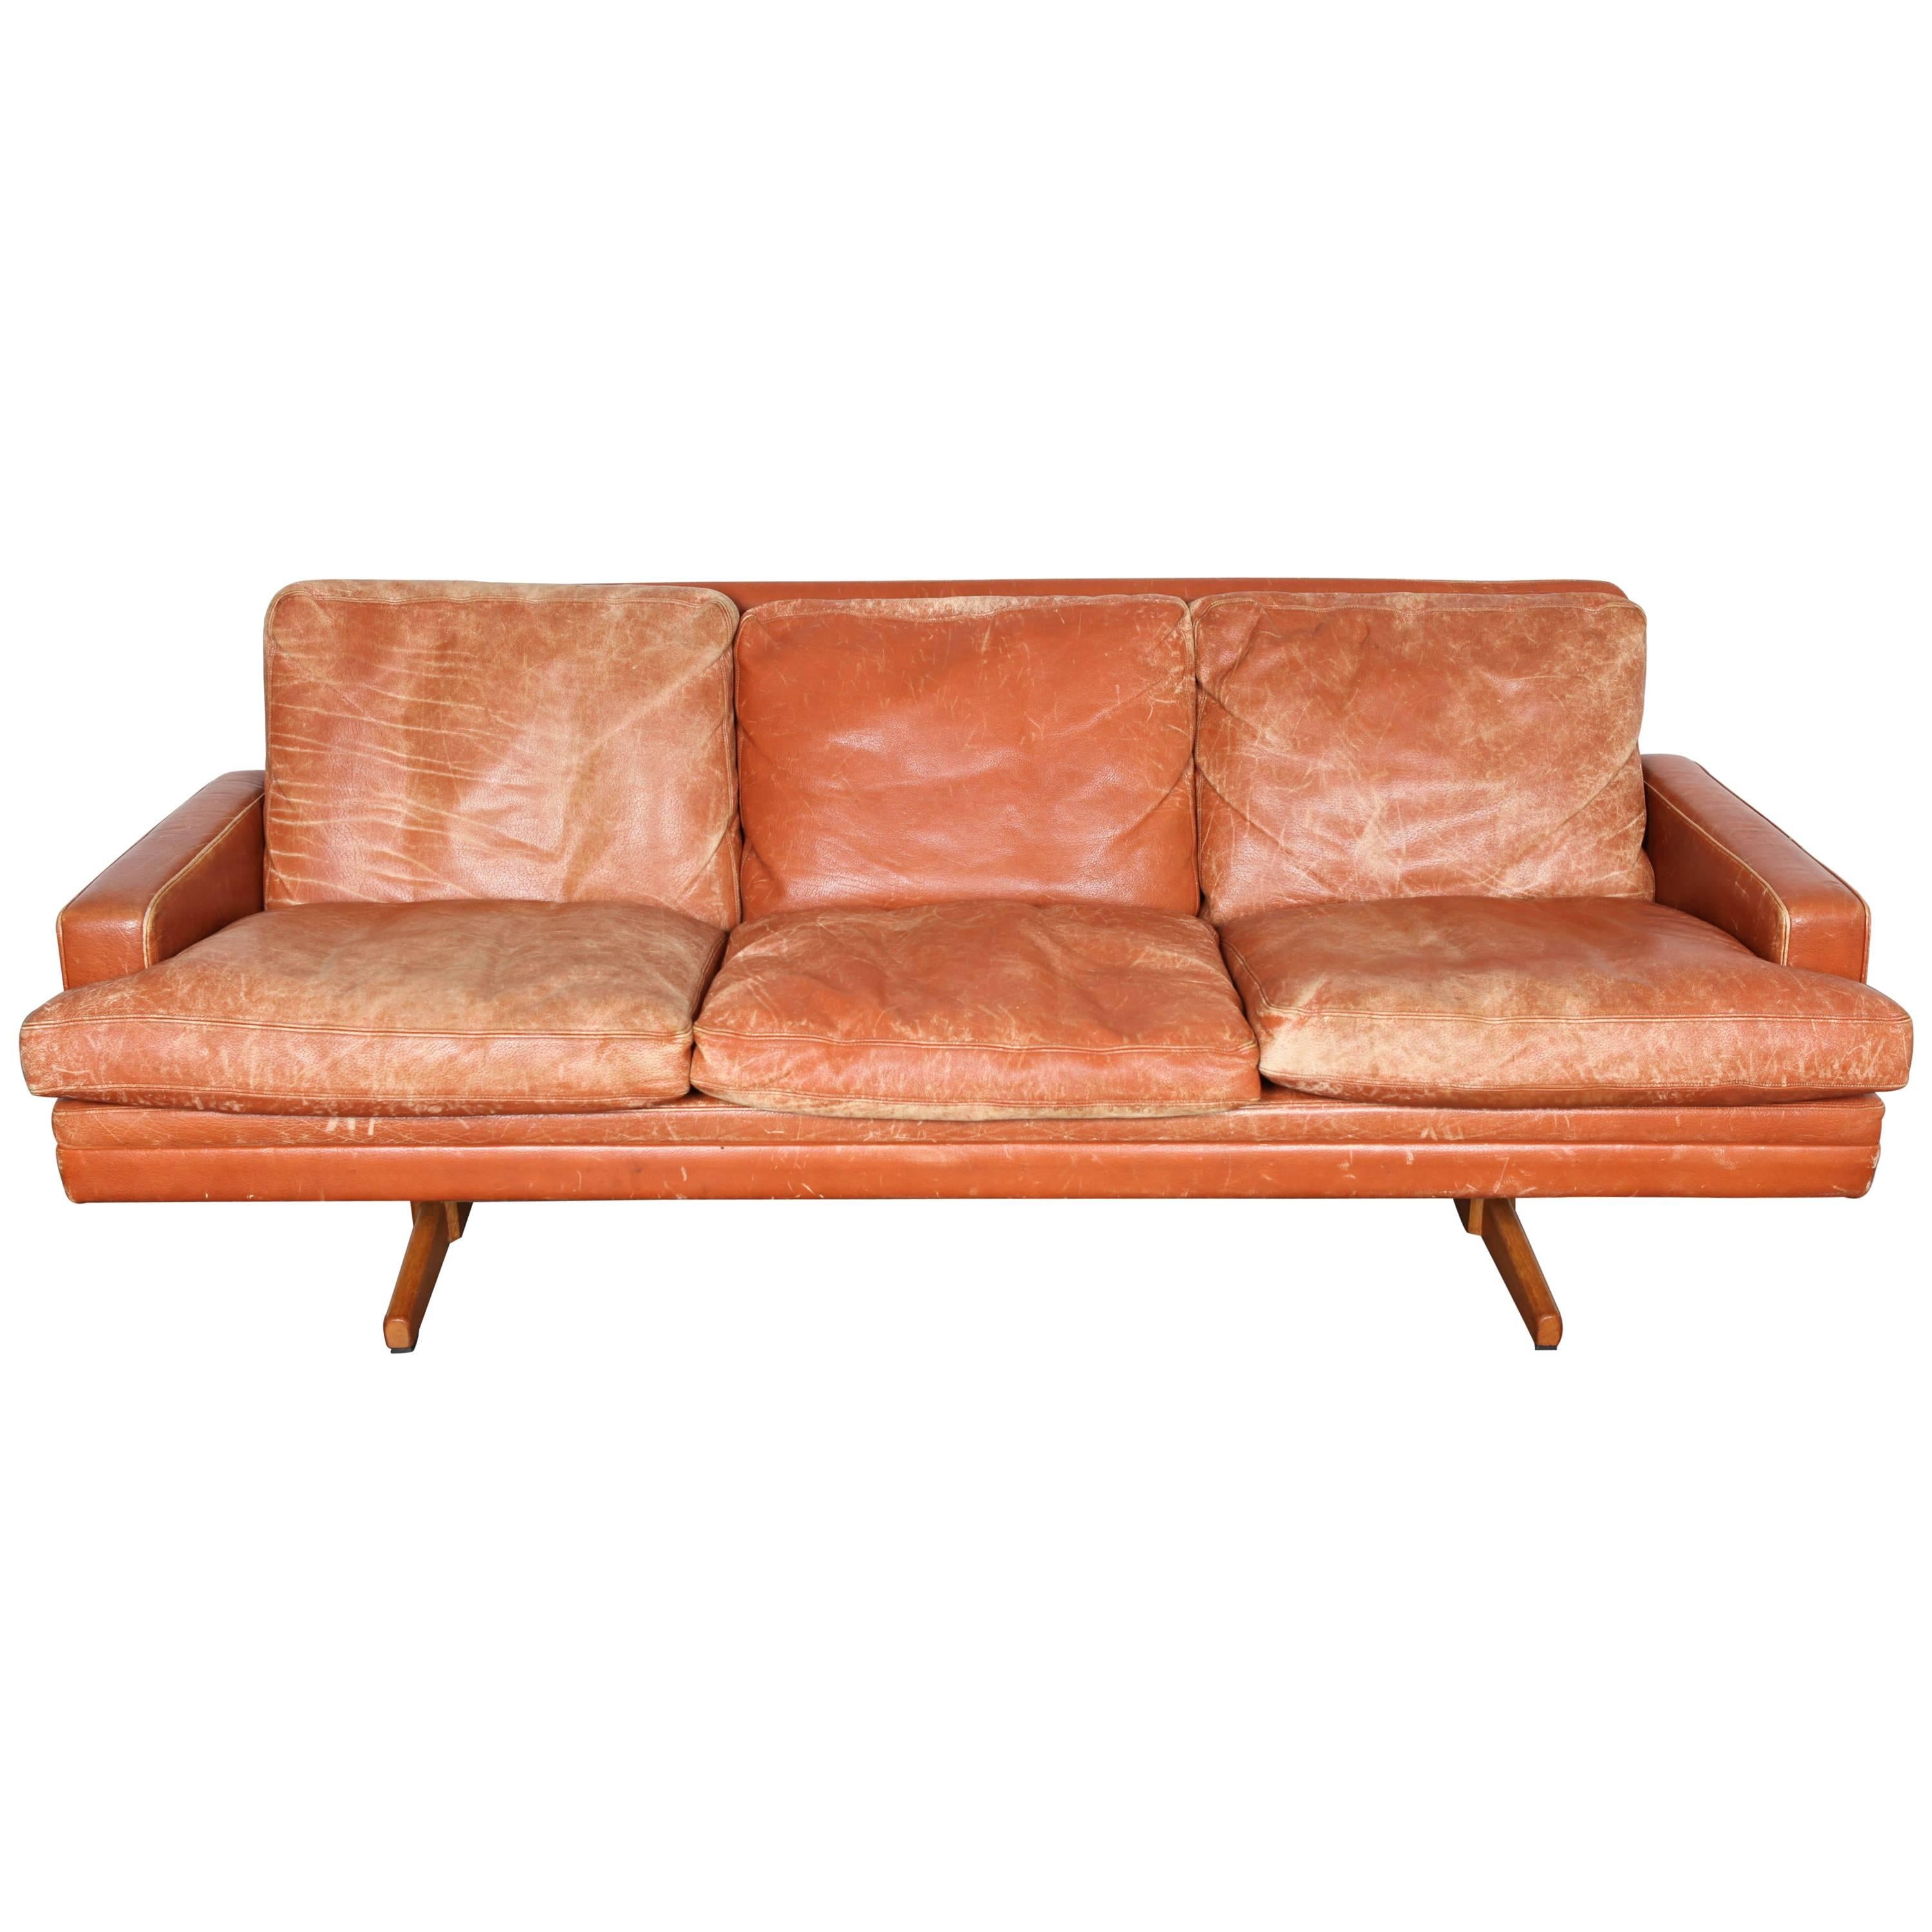 Norwegian Mid-Century Modern Burnt-Orange Leather Sofa by Fredrik Kayser